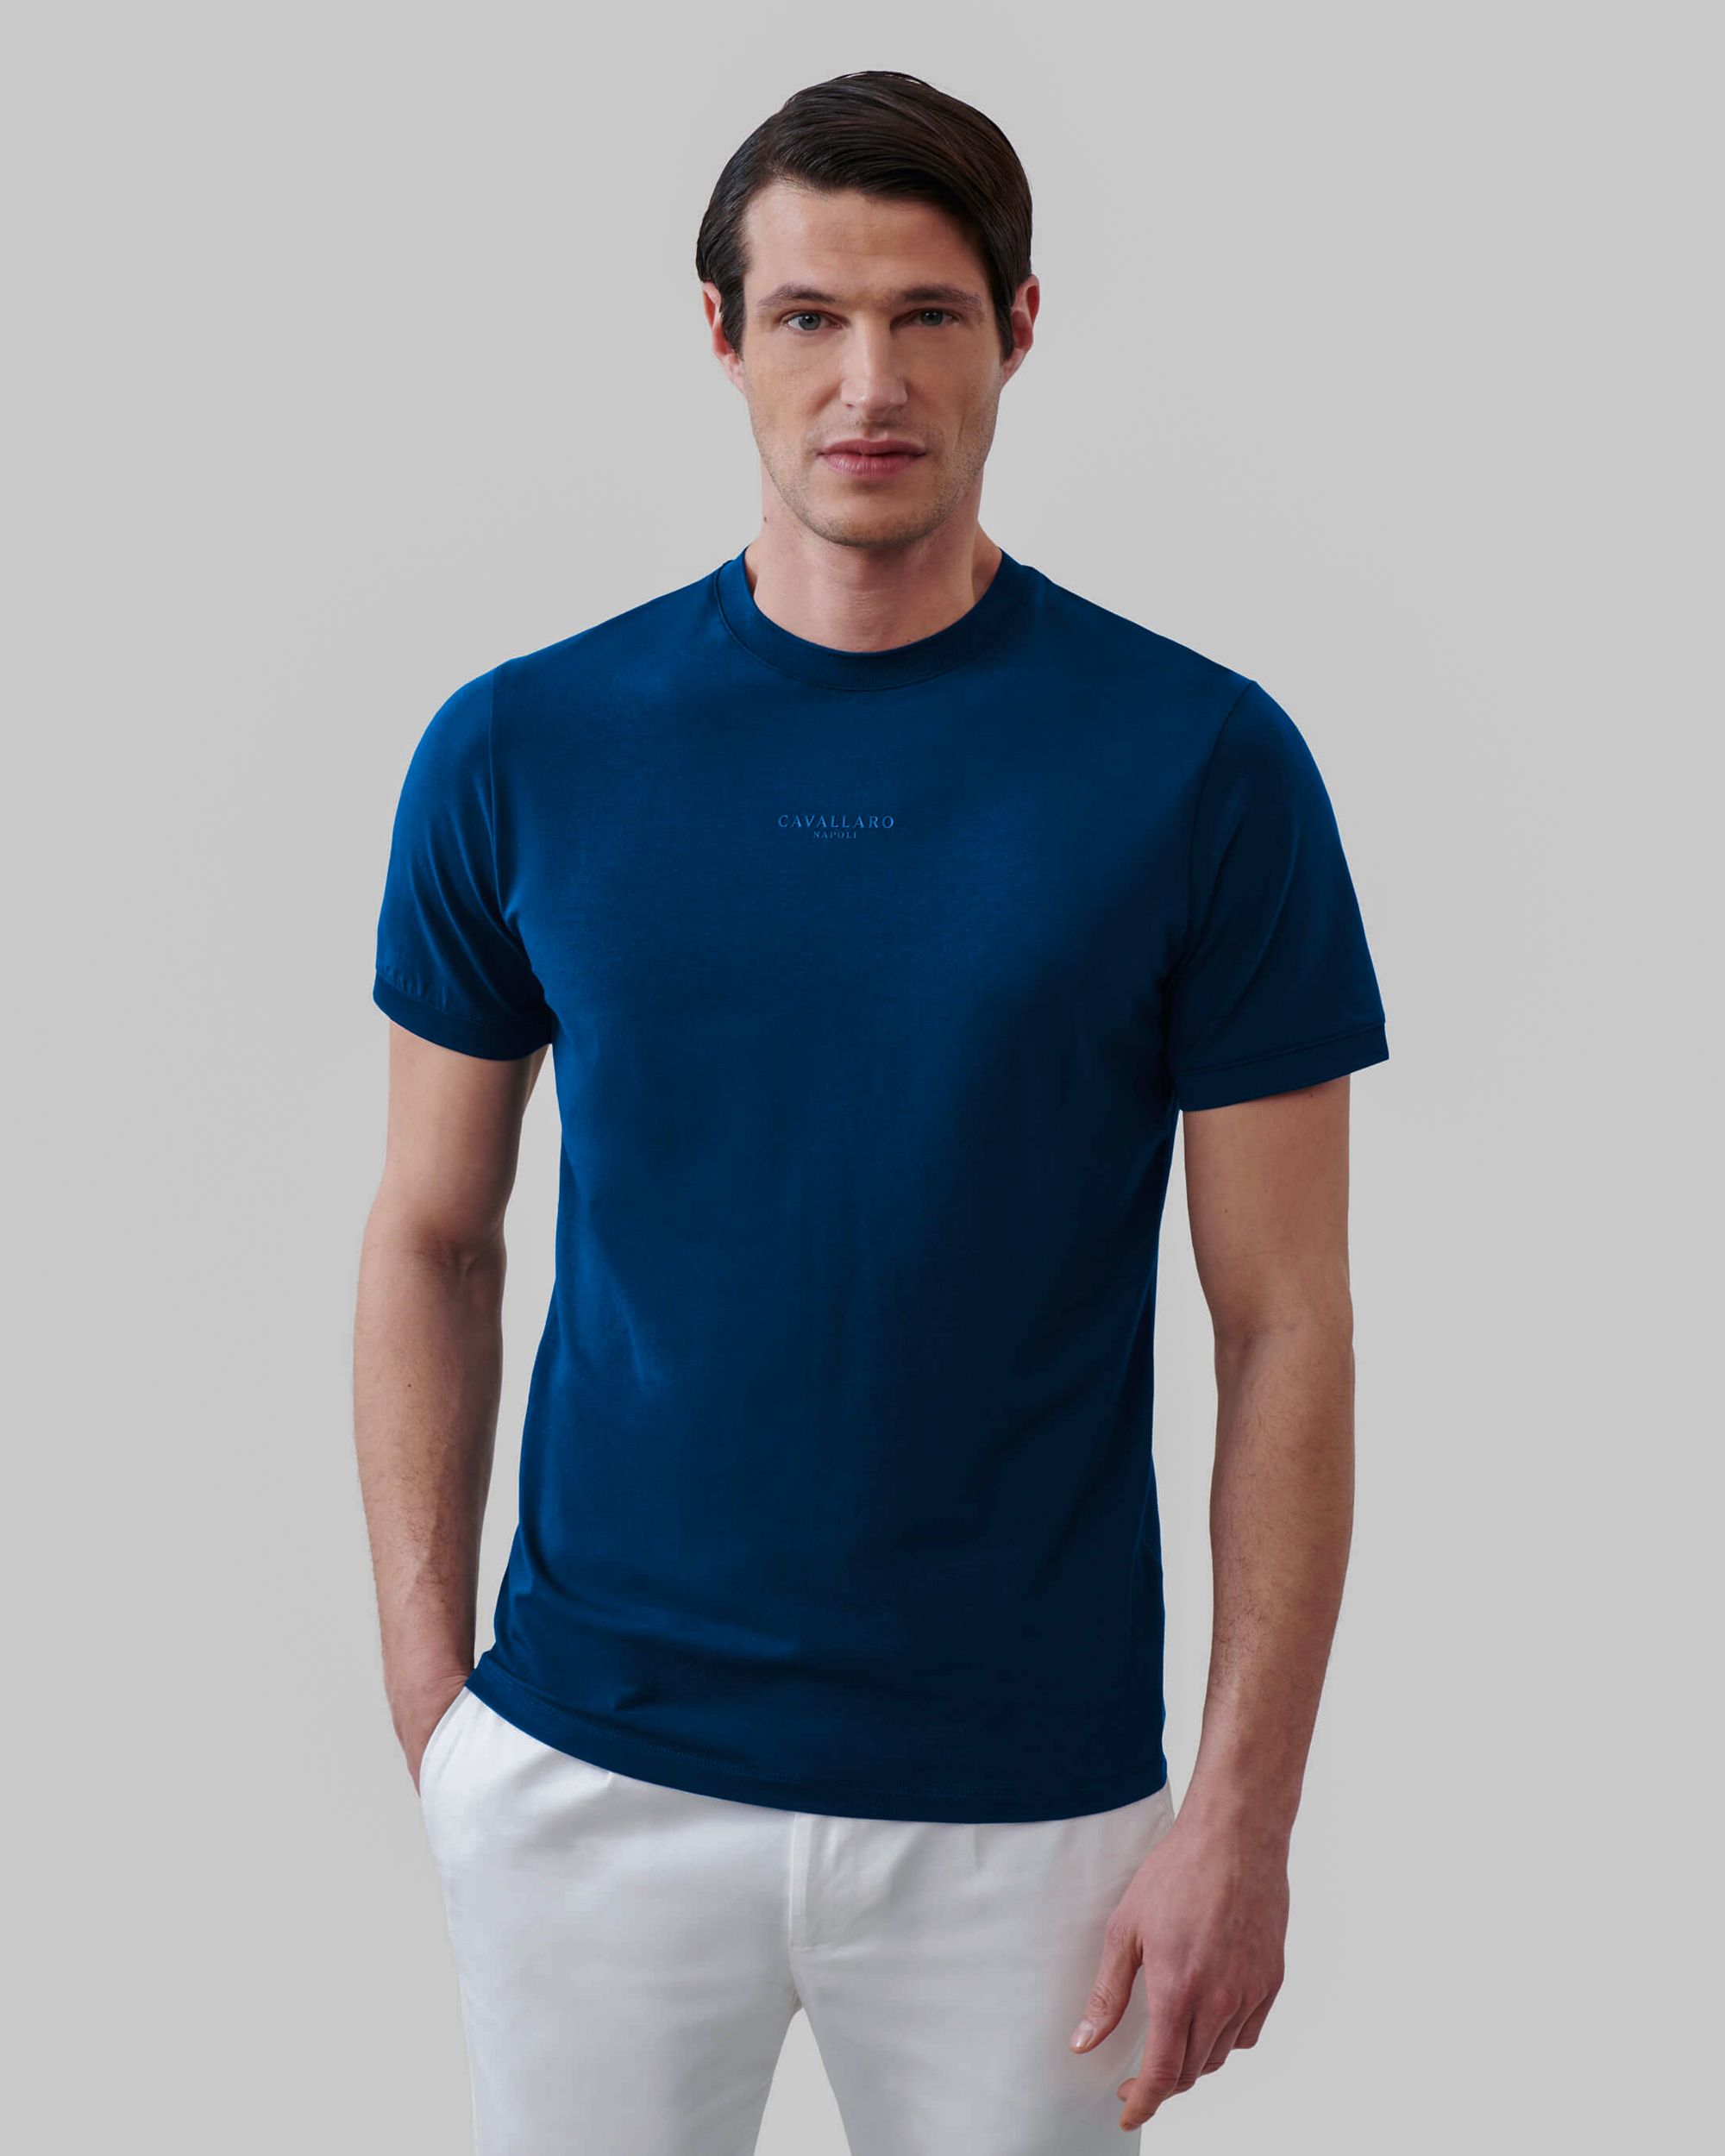 Cavallaro Darenio T-shirt KM Blauw 094420-001-L